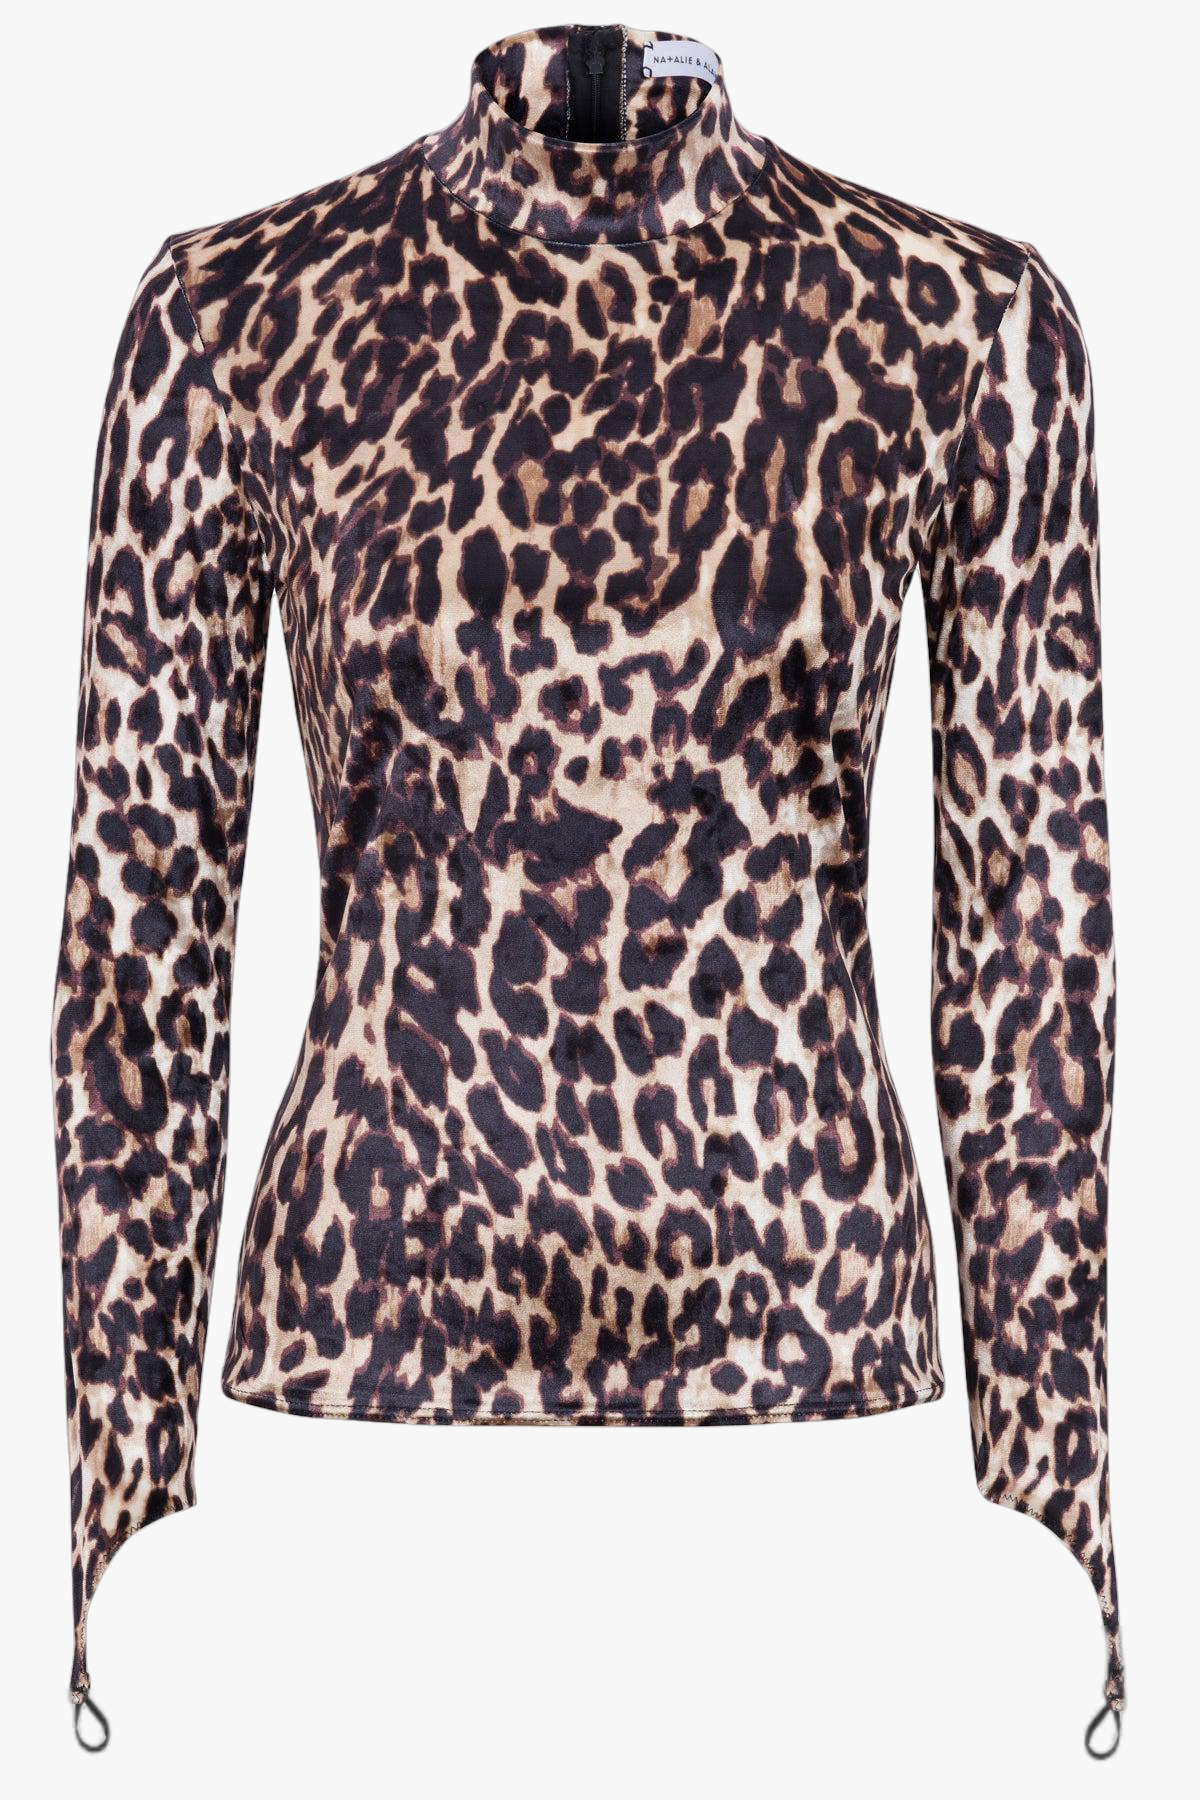 Aan Verspilling Denk vooruit Buy Lydia Leopard Print Velvet Top- Made To Order by Natalie and Alanna -  Long sleeve tops | Seezona